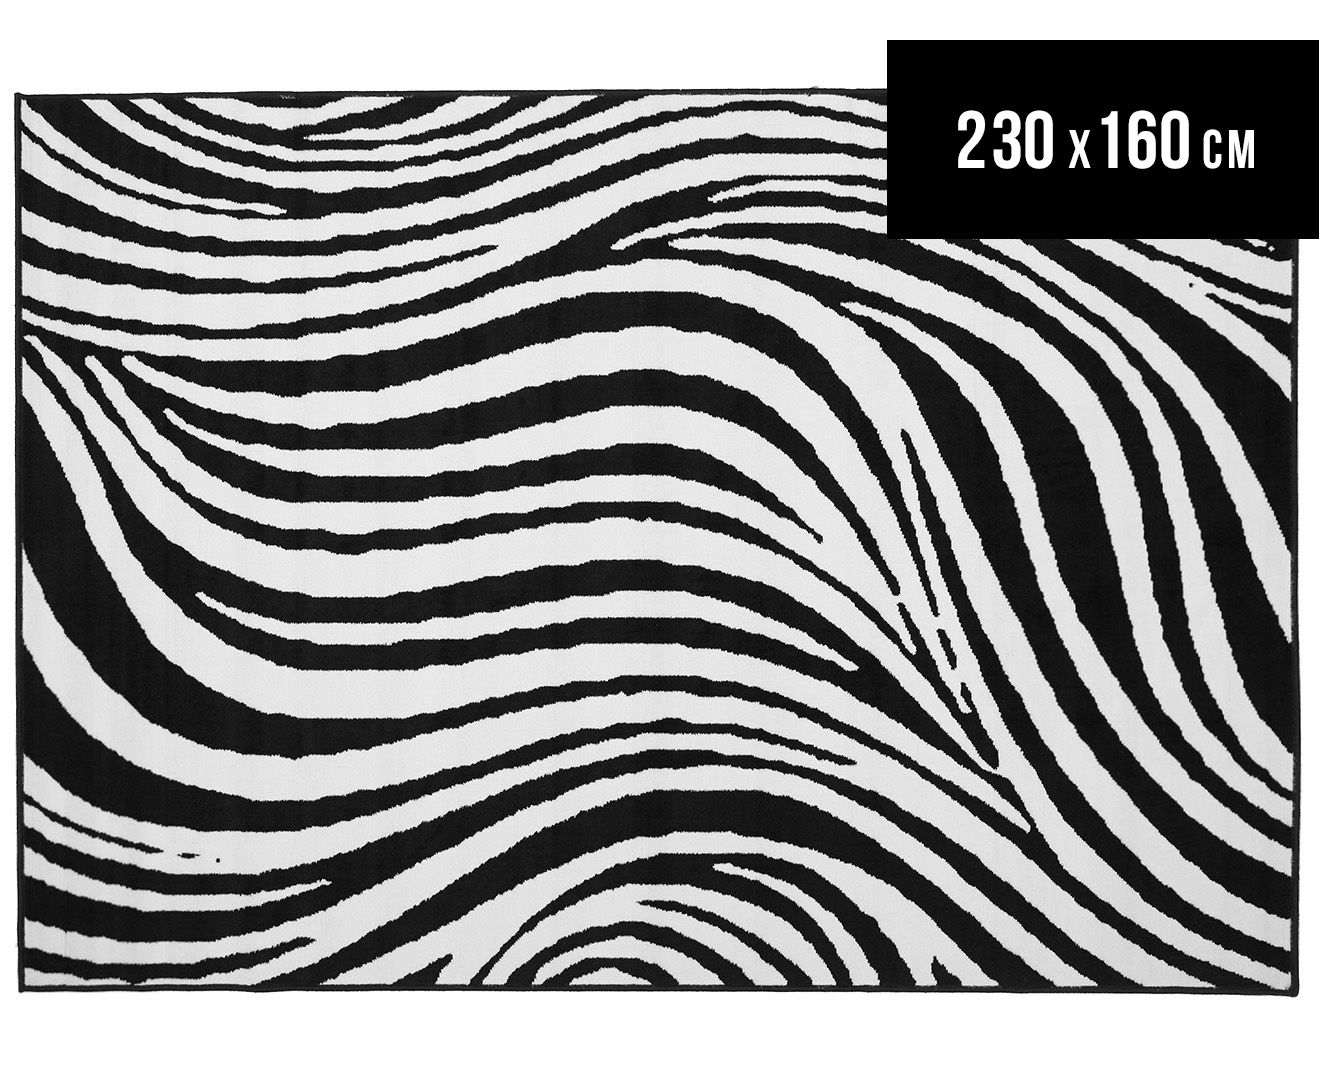 Hot Dash Zebra 230x160cm Jute Rug - Black/White